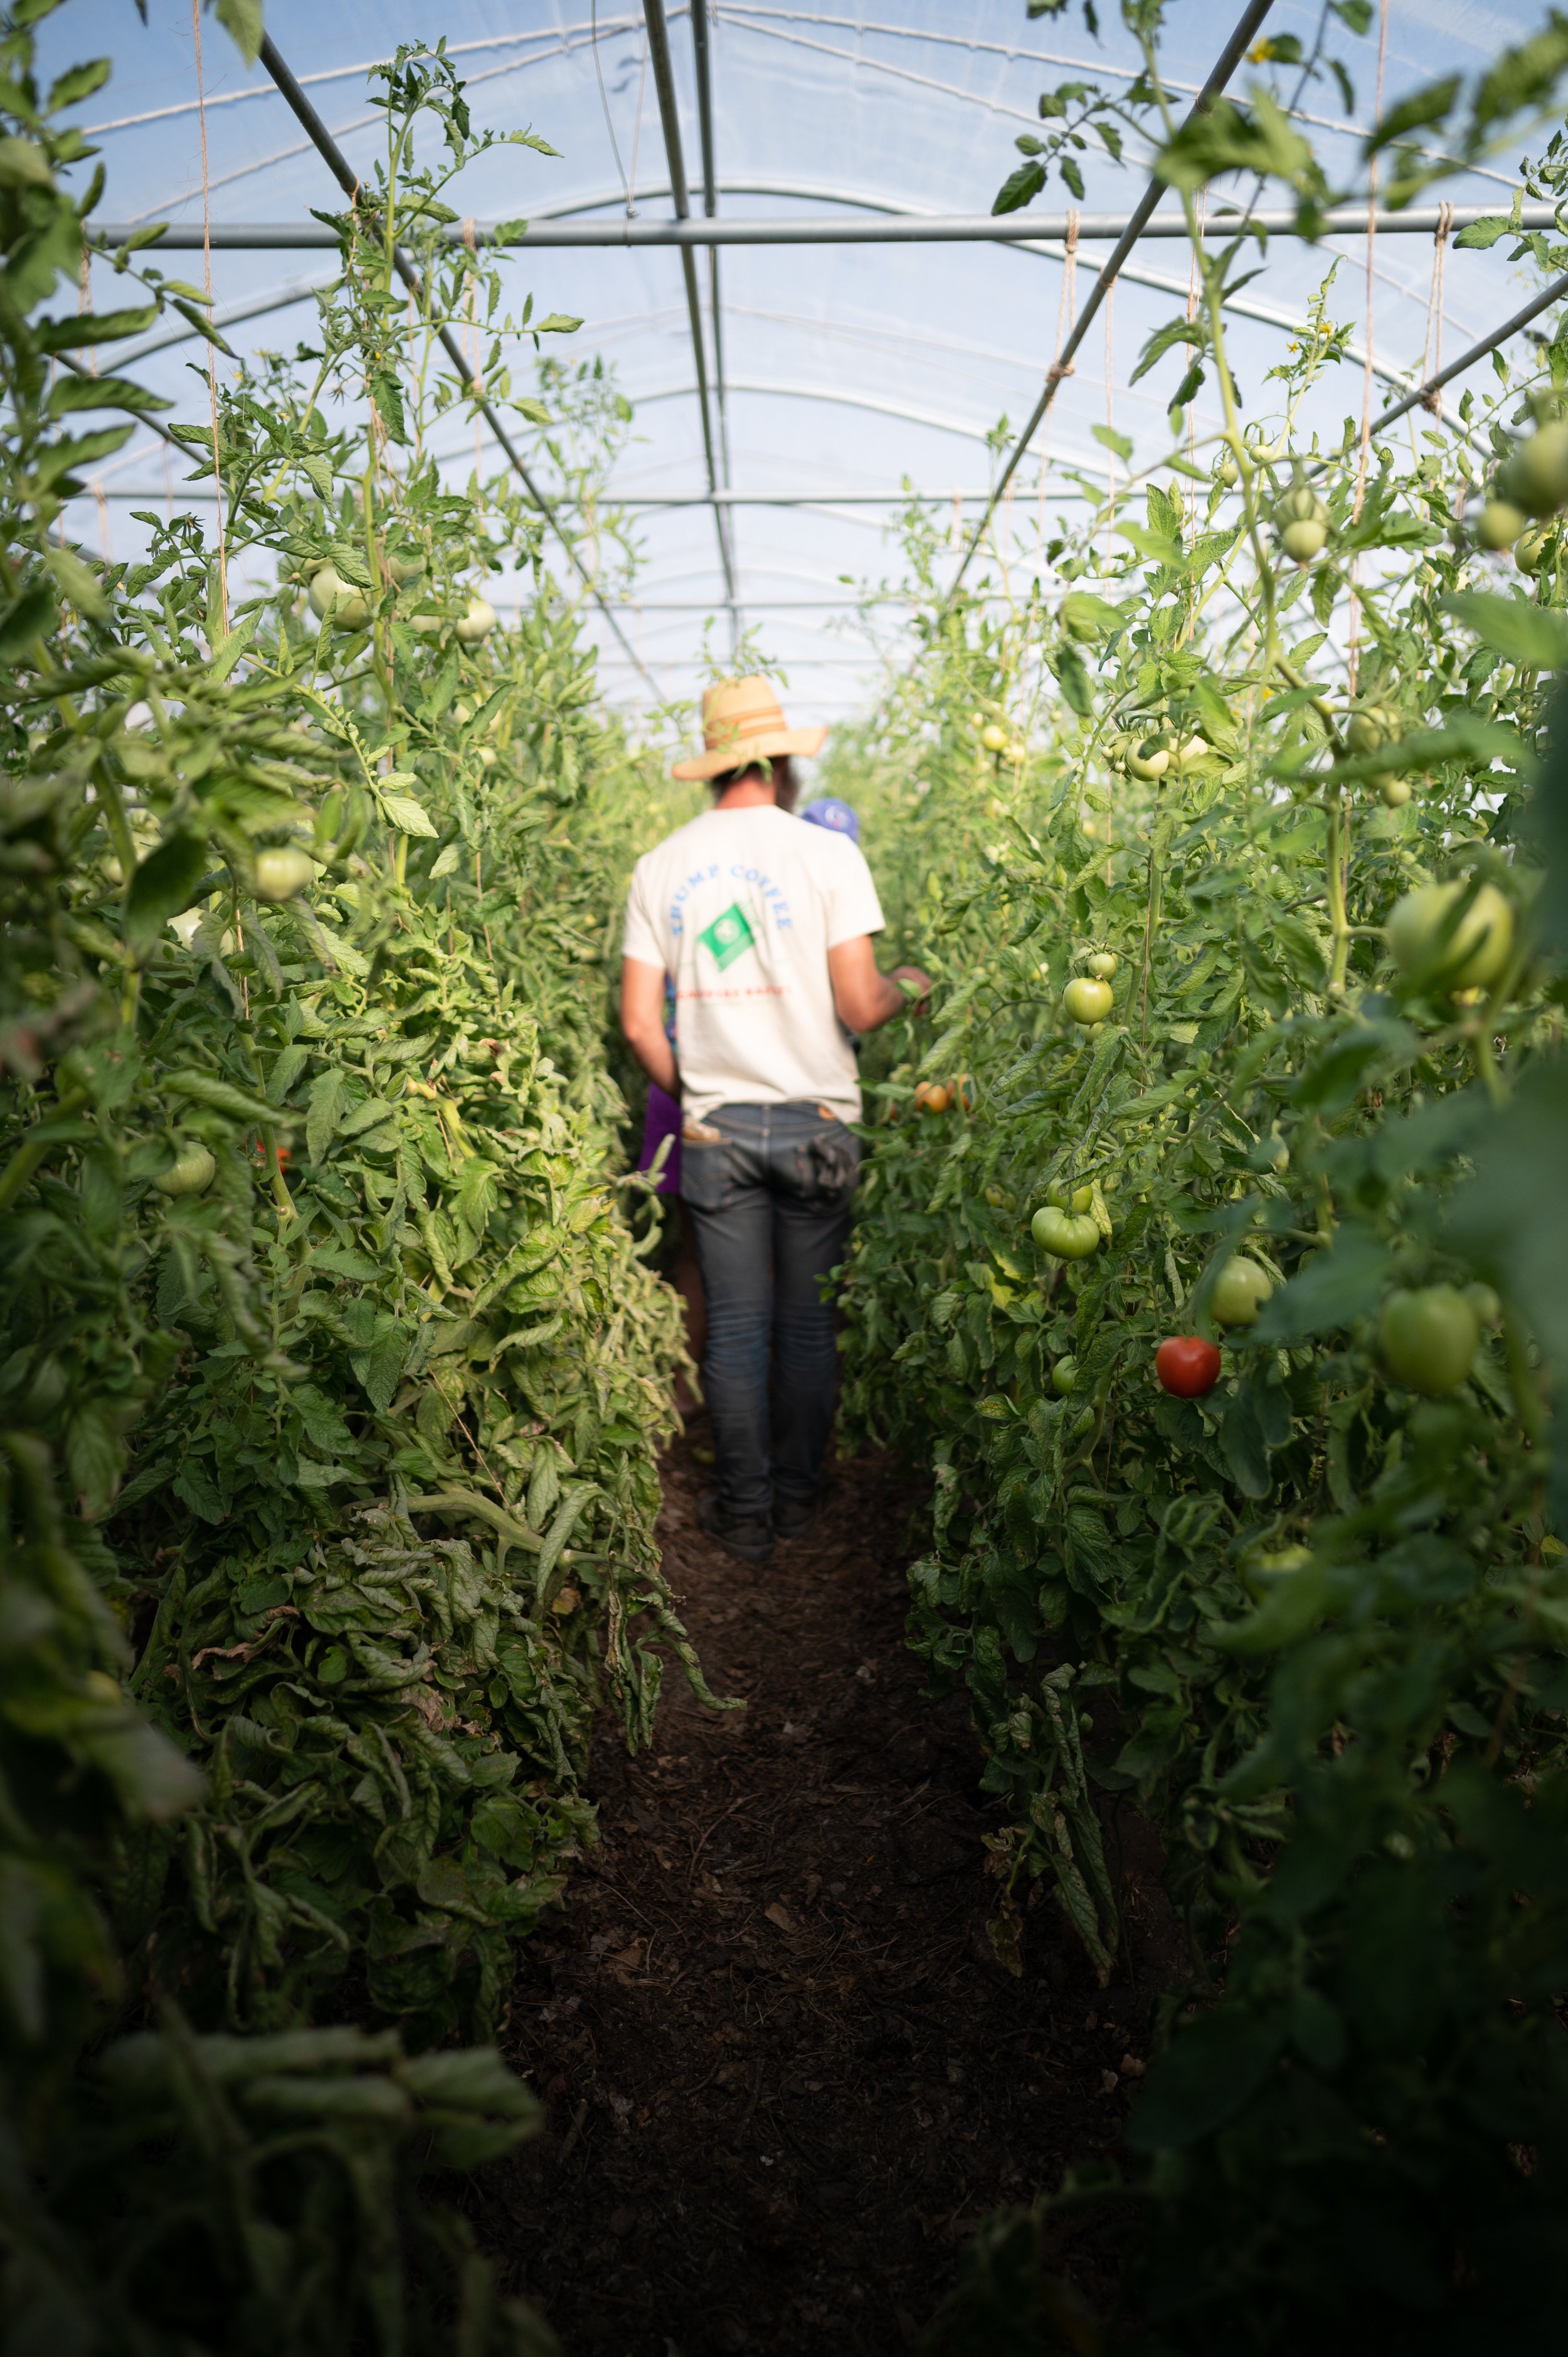 Bowman walks through a row of greenhouse tomatoes.